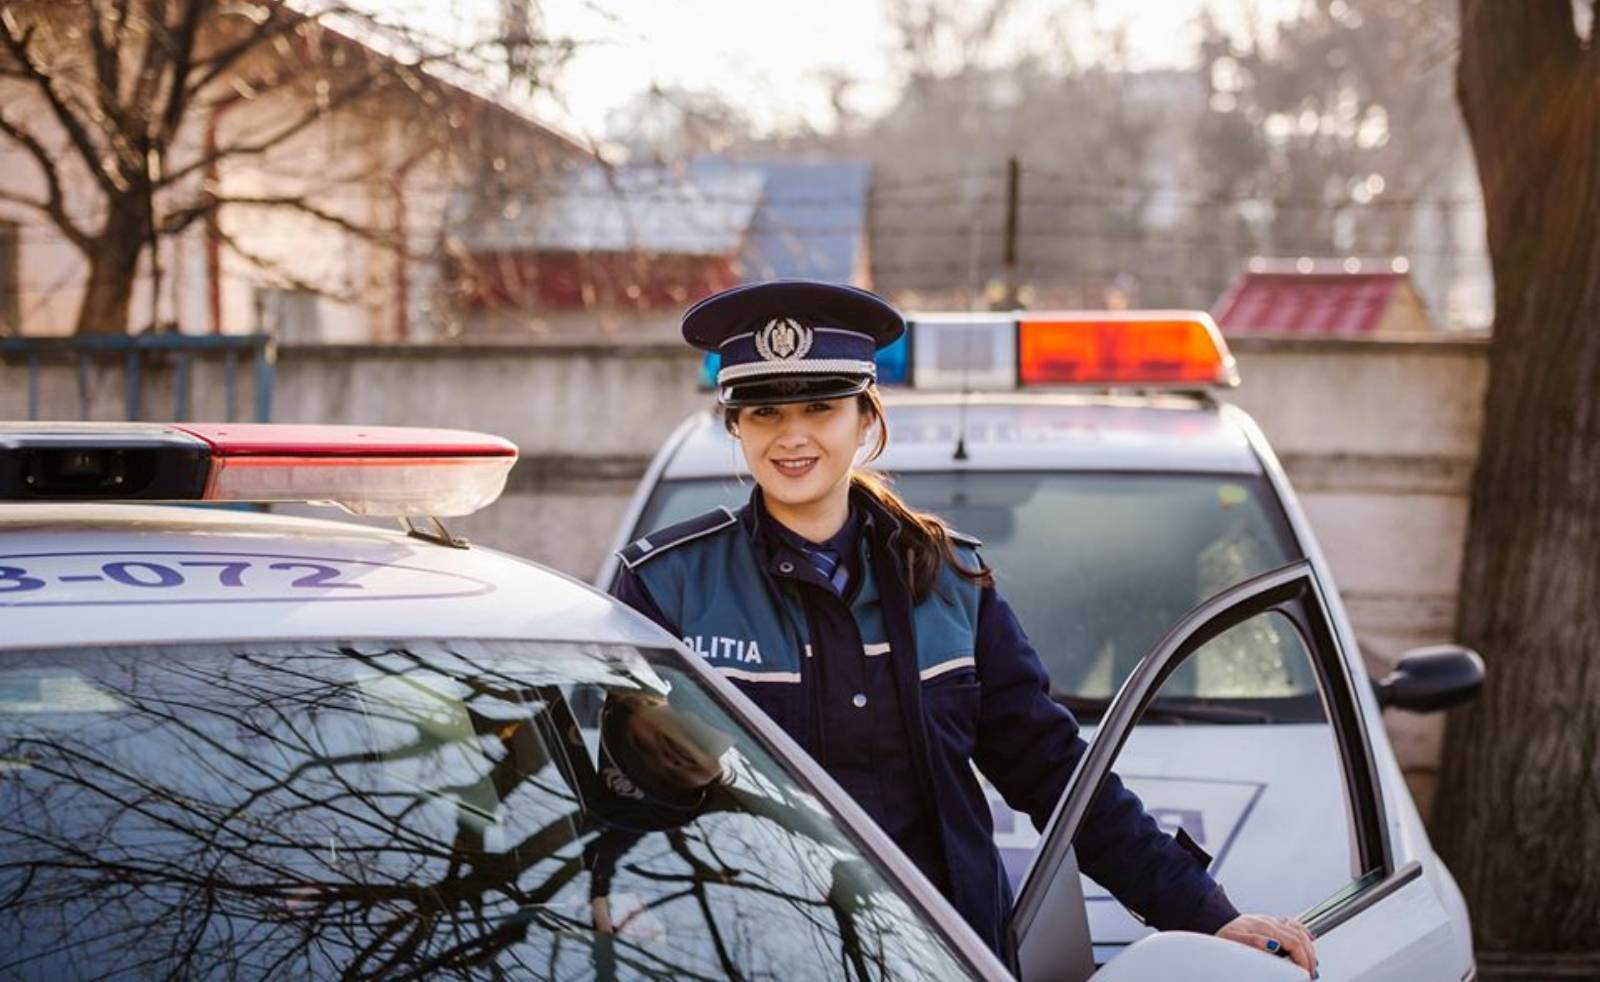 Rumænsk politi byder lys velkommen